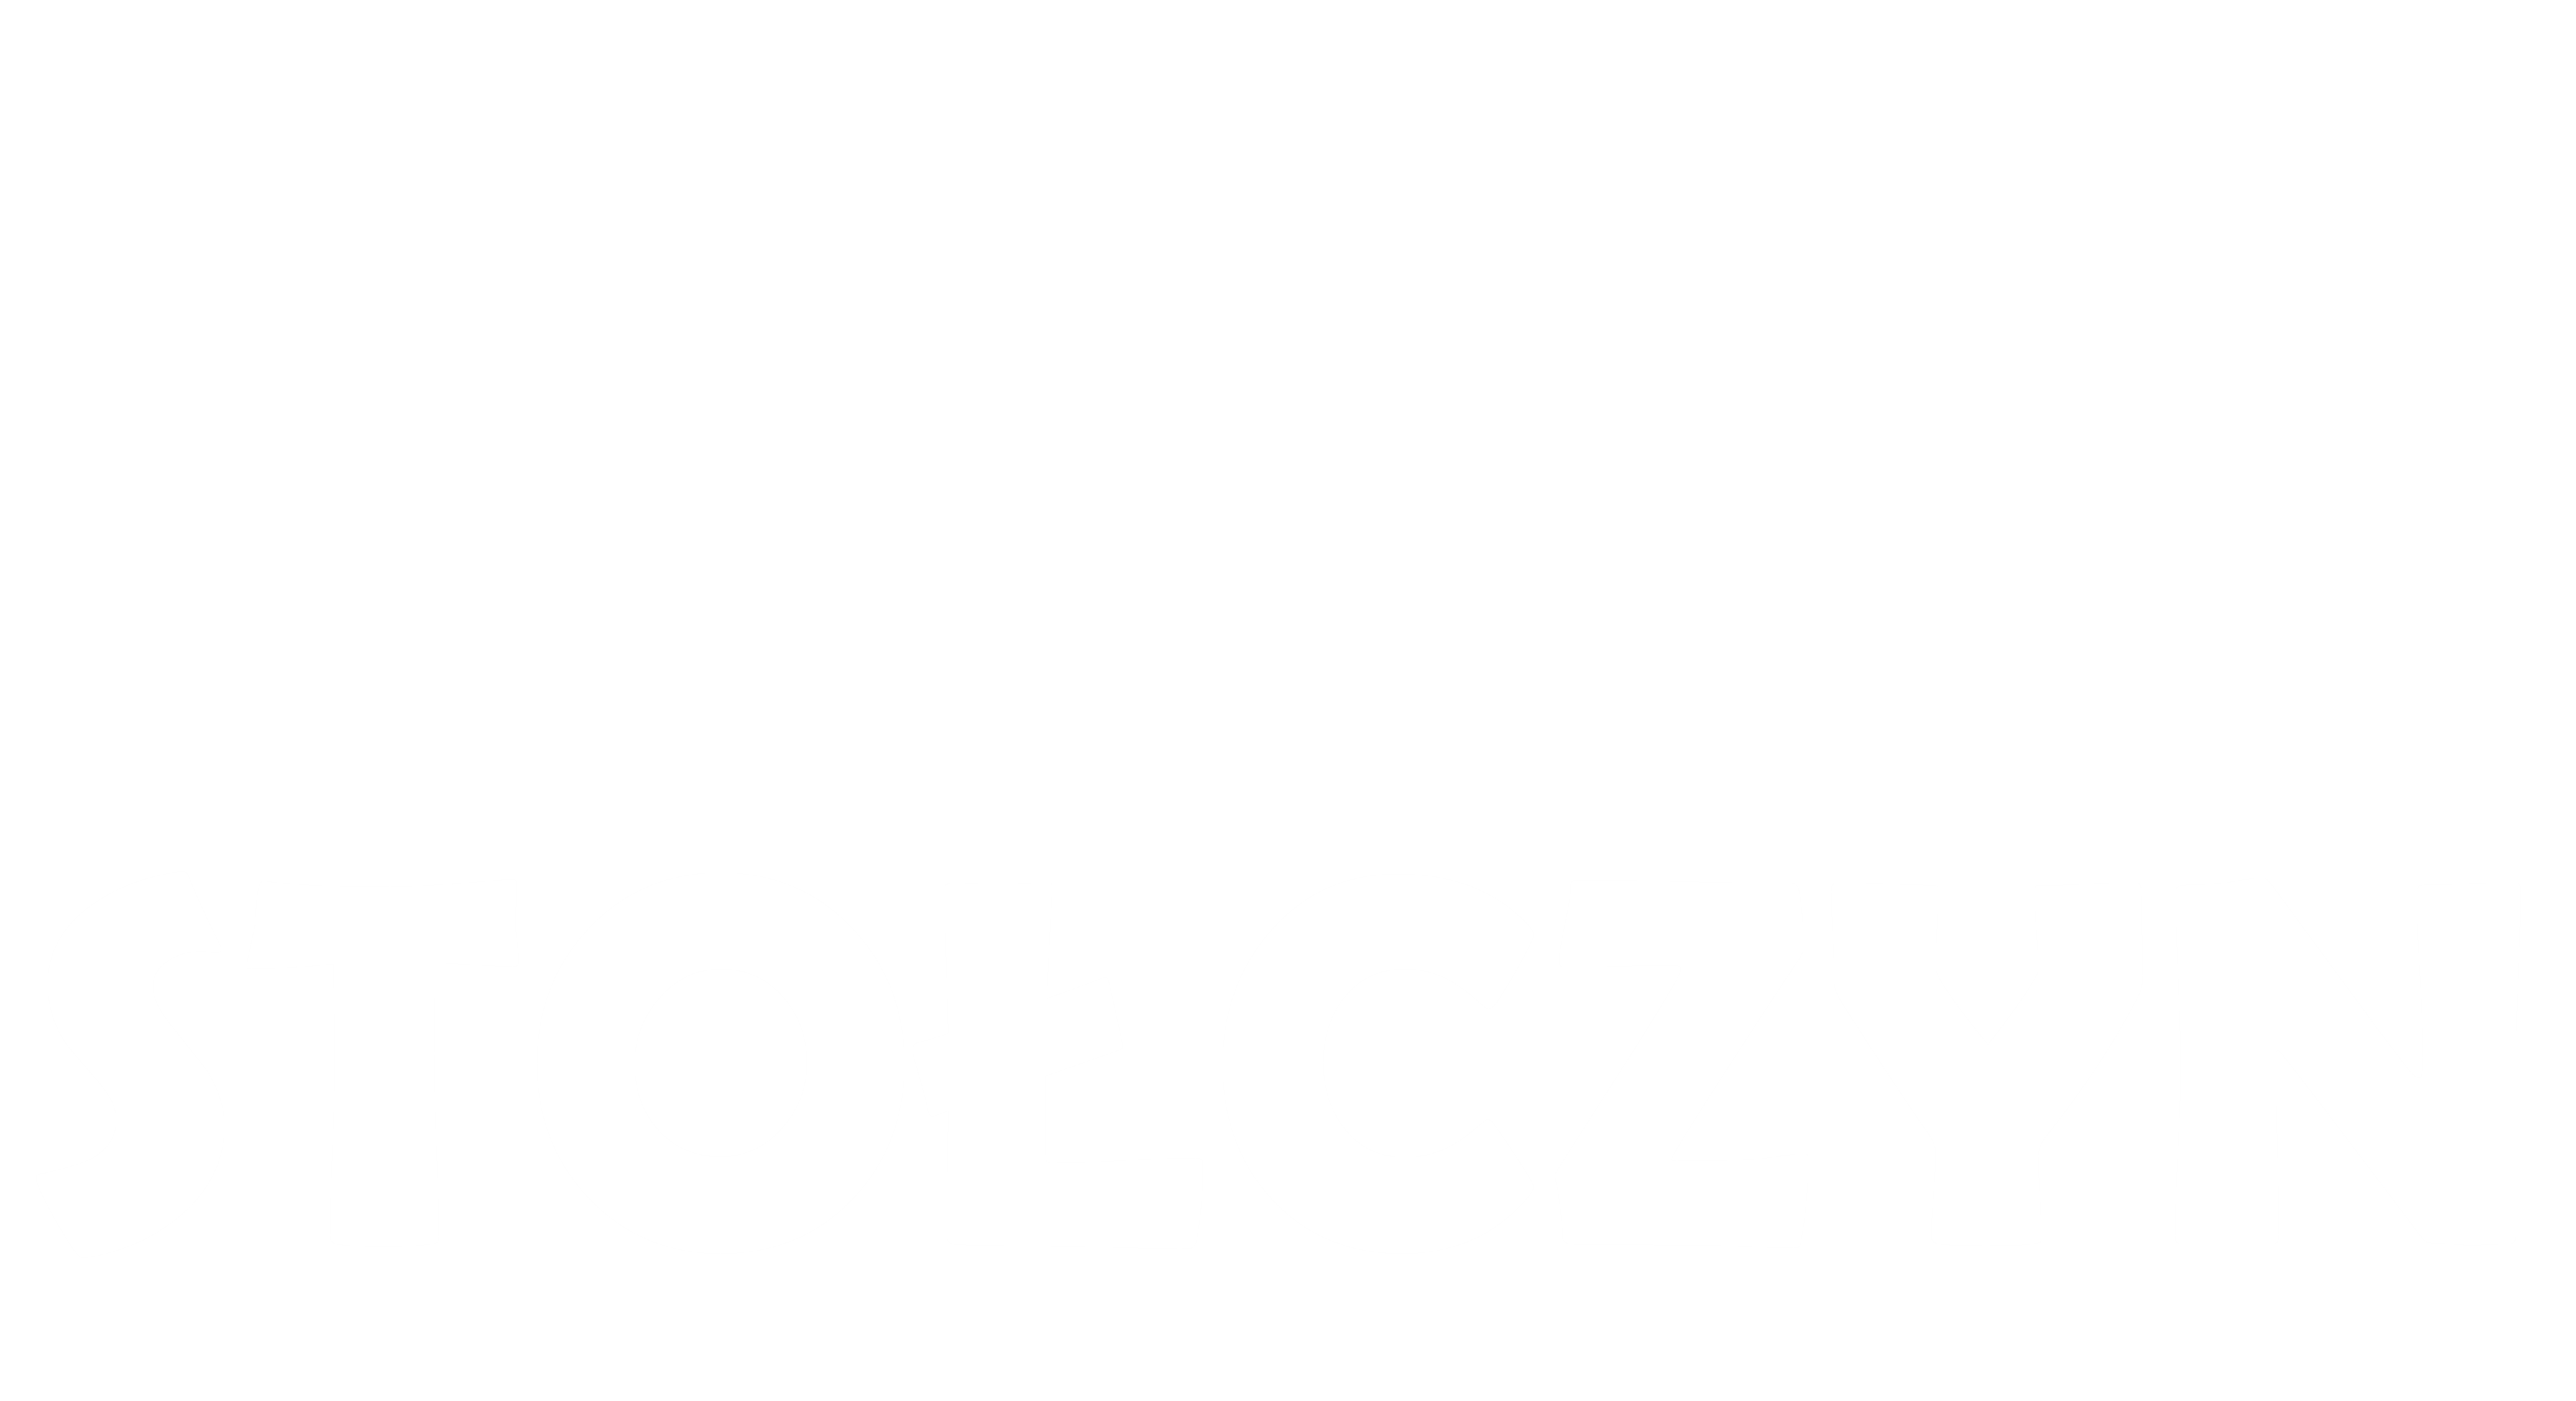 stolczyn. com logo